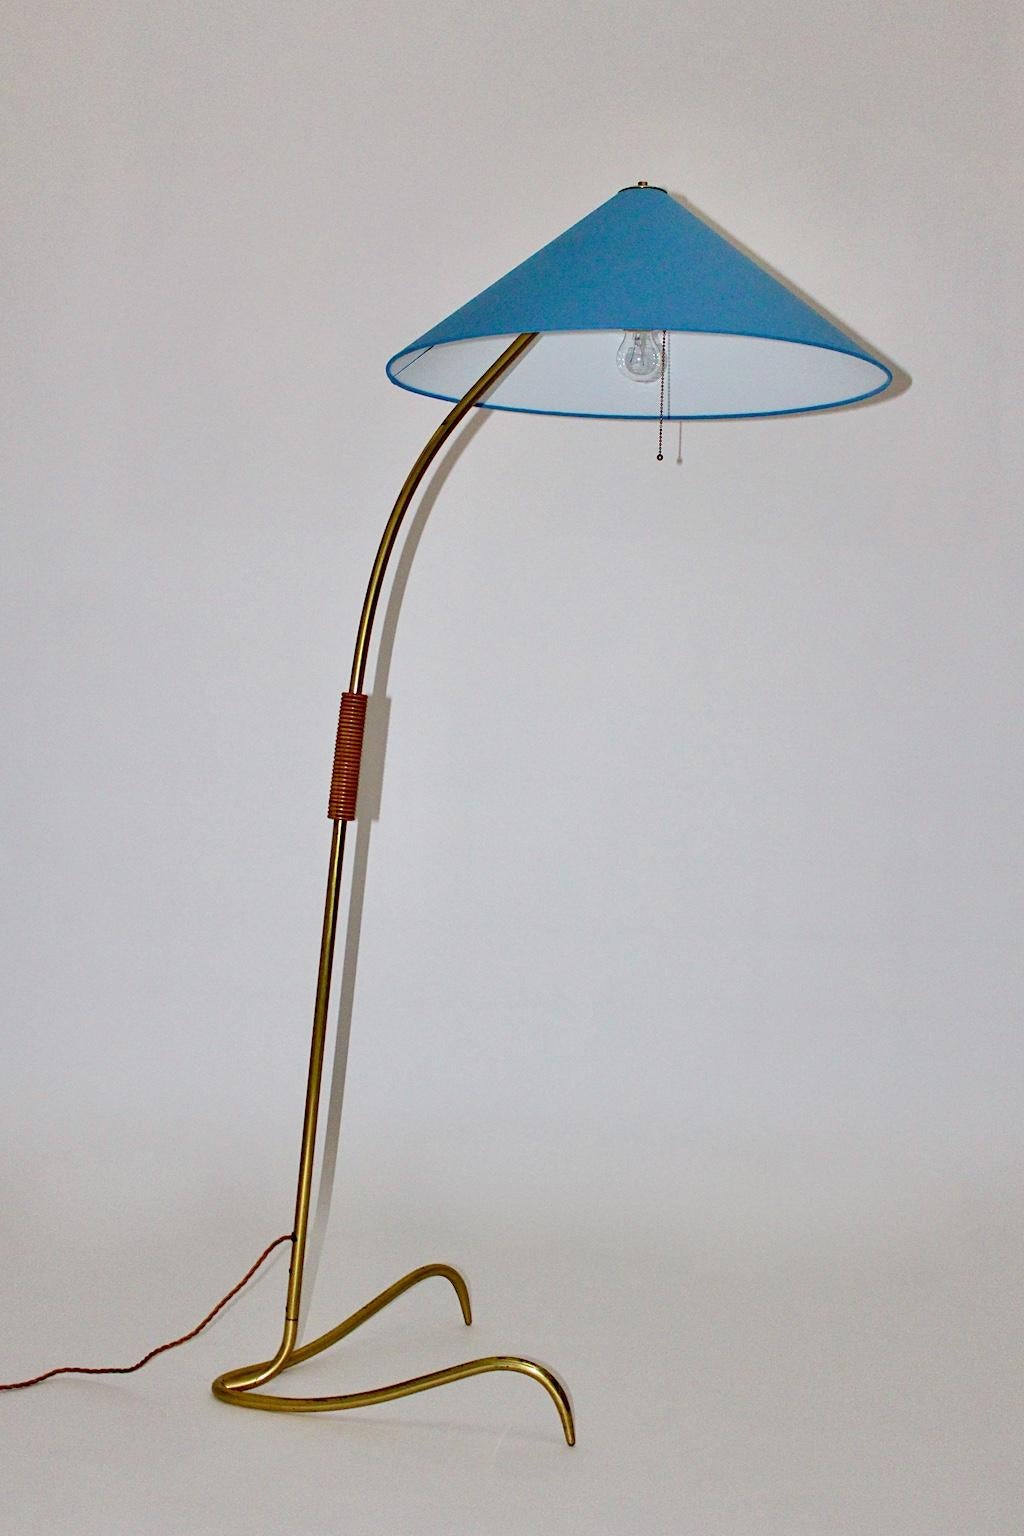 Austrian Rupert Nikoll Mid-Century Modern Vintage Brass Clawfoot Floor Lamp, 1950s Vienna For Sale